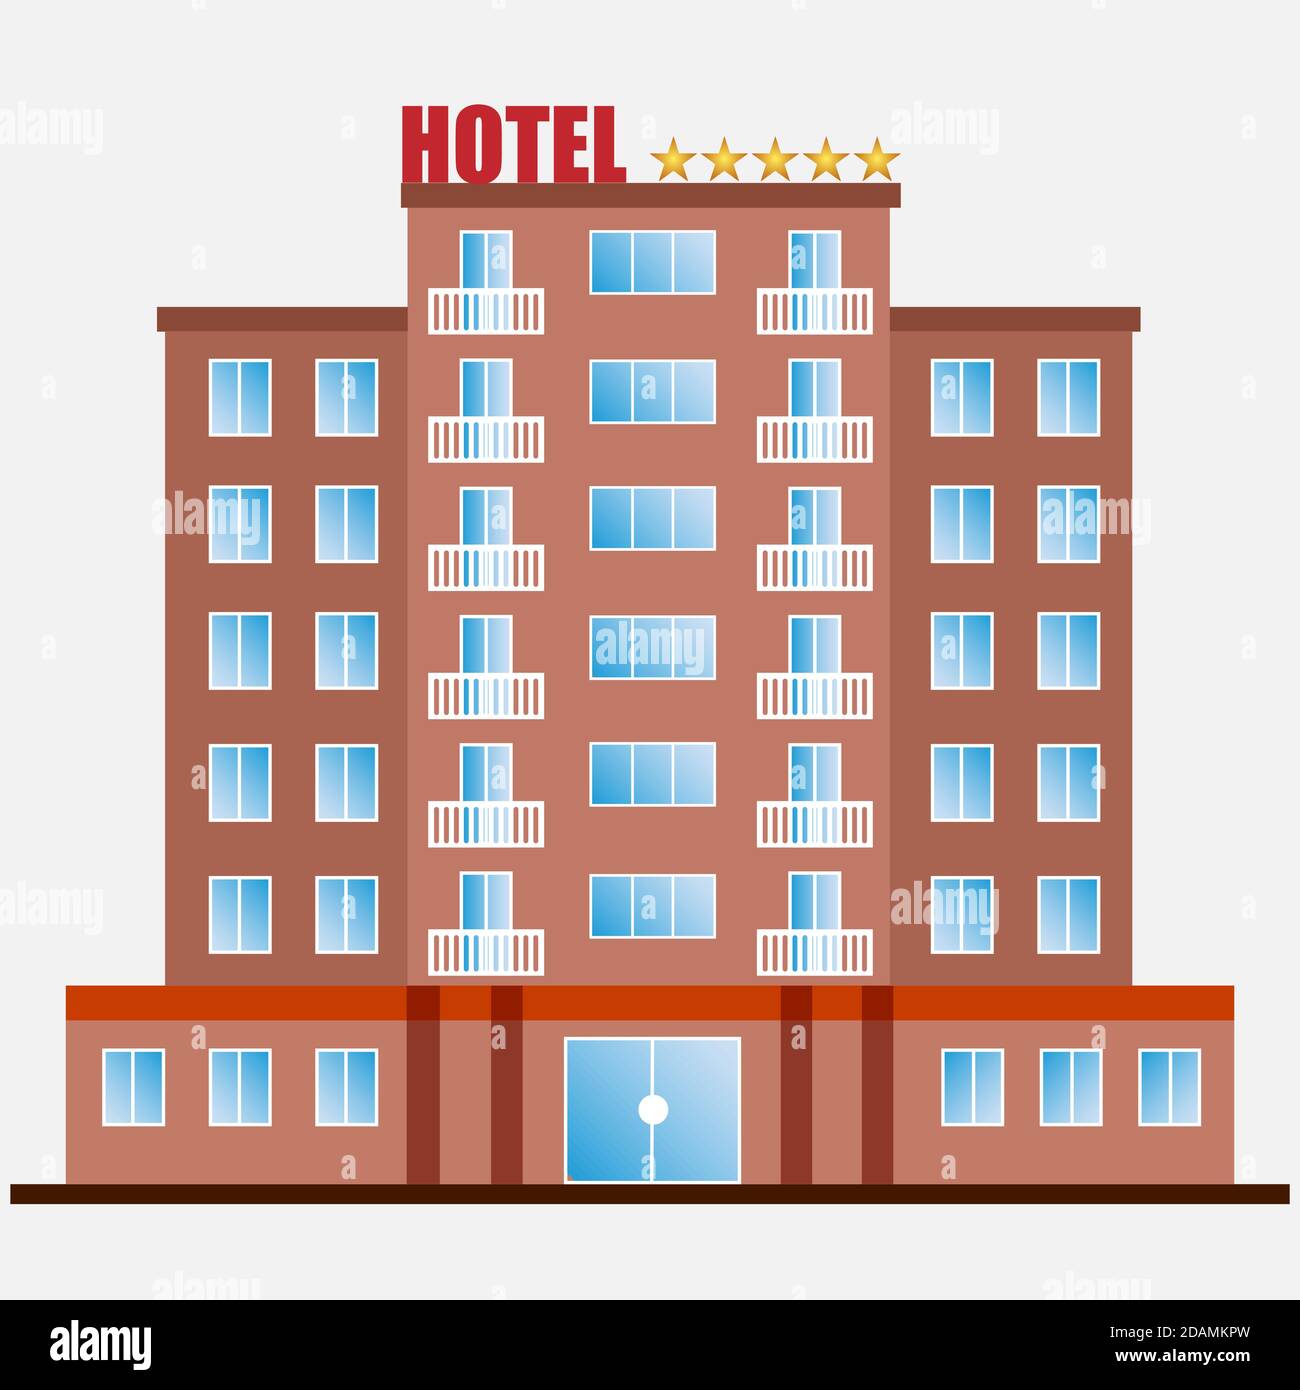 Hotel, icon hotel, reservation, porter, recreation, building. Flat design, vector. Stock Vector